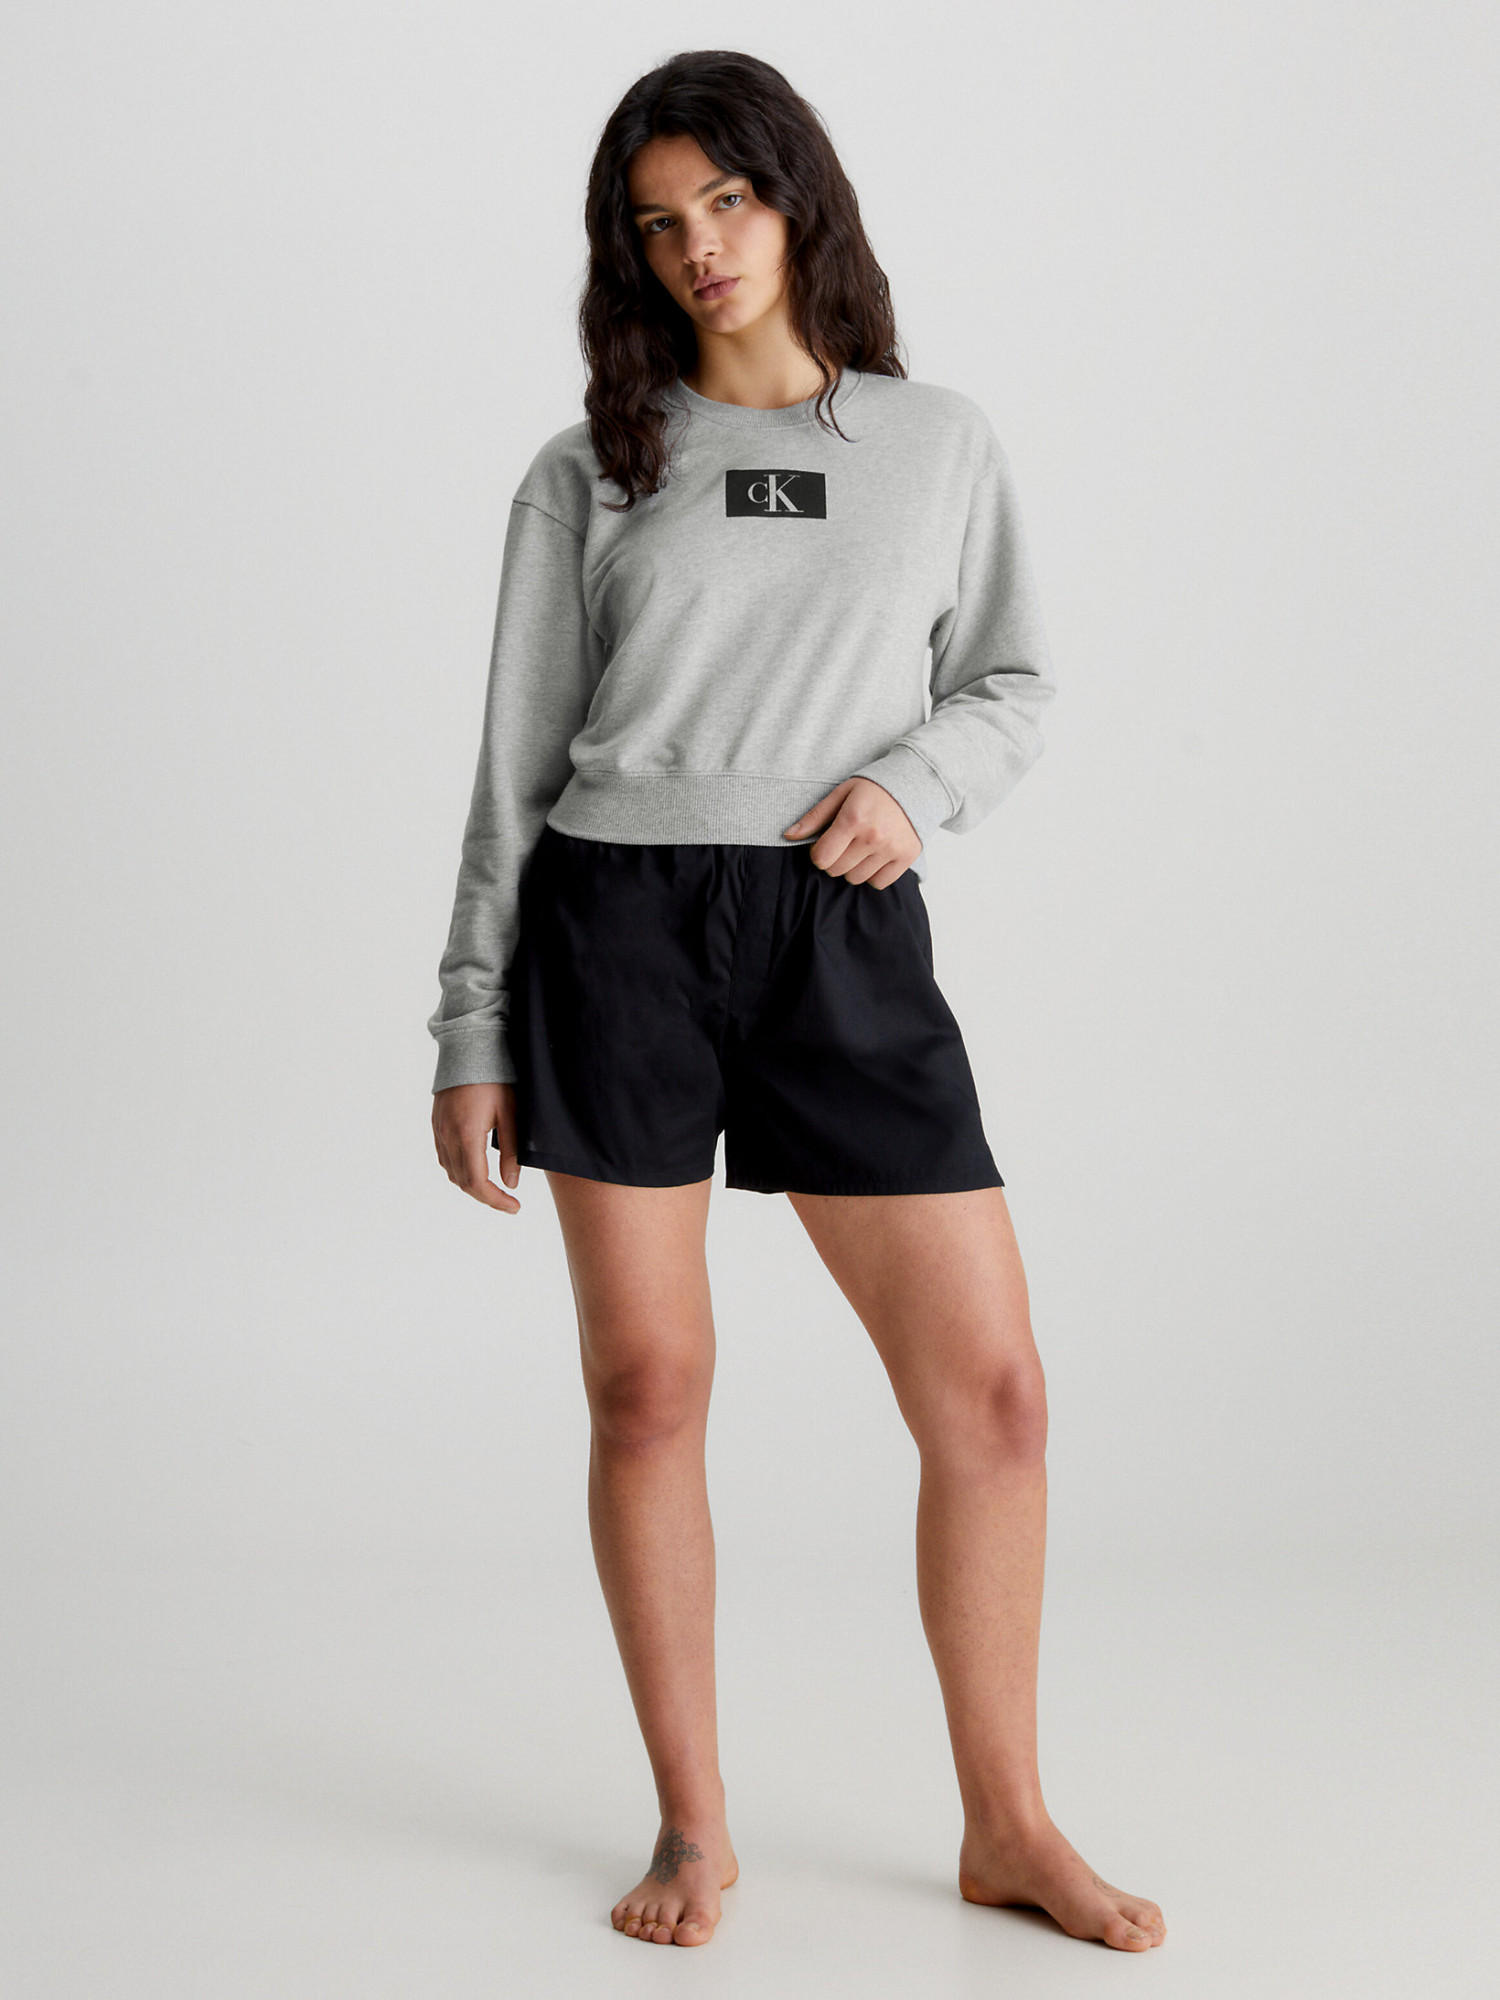 Dámská mikina Lounge Sweatshirt CK96 L/S 000QS6942EP7A šedá - Calvin Klein XL